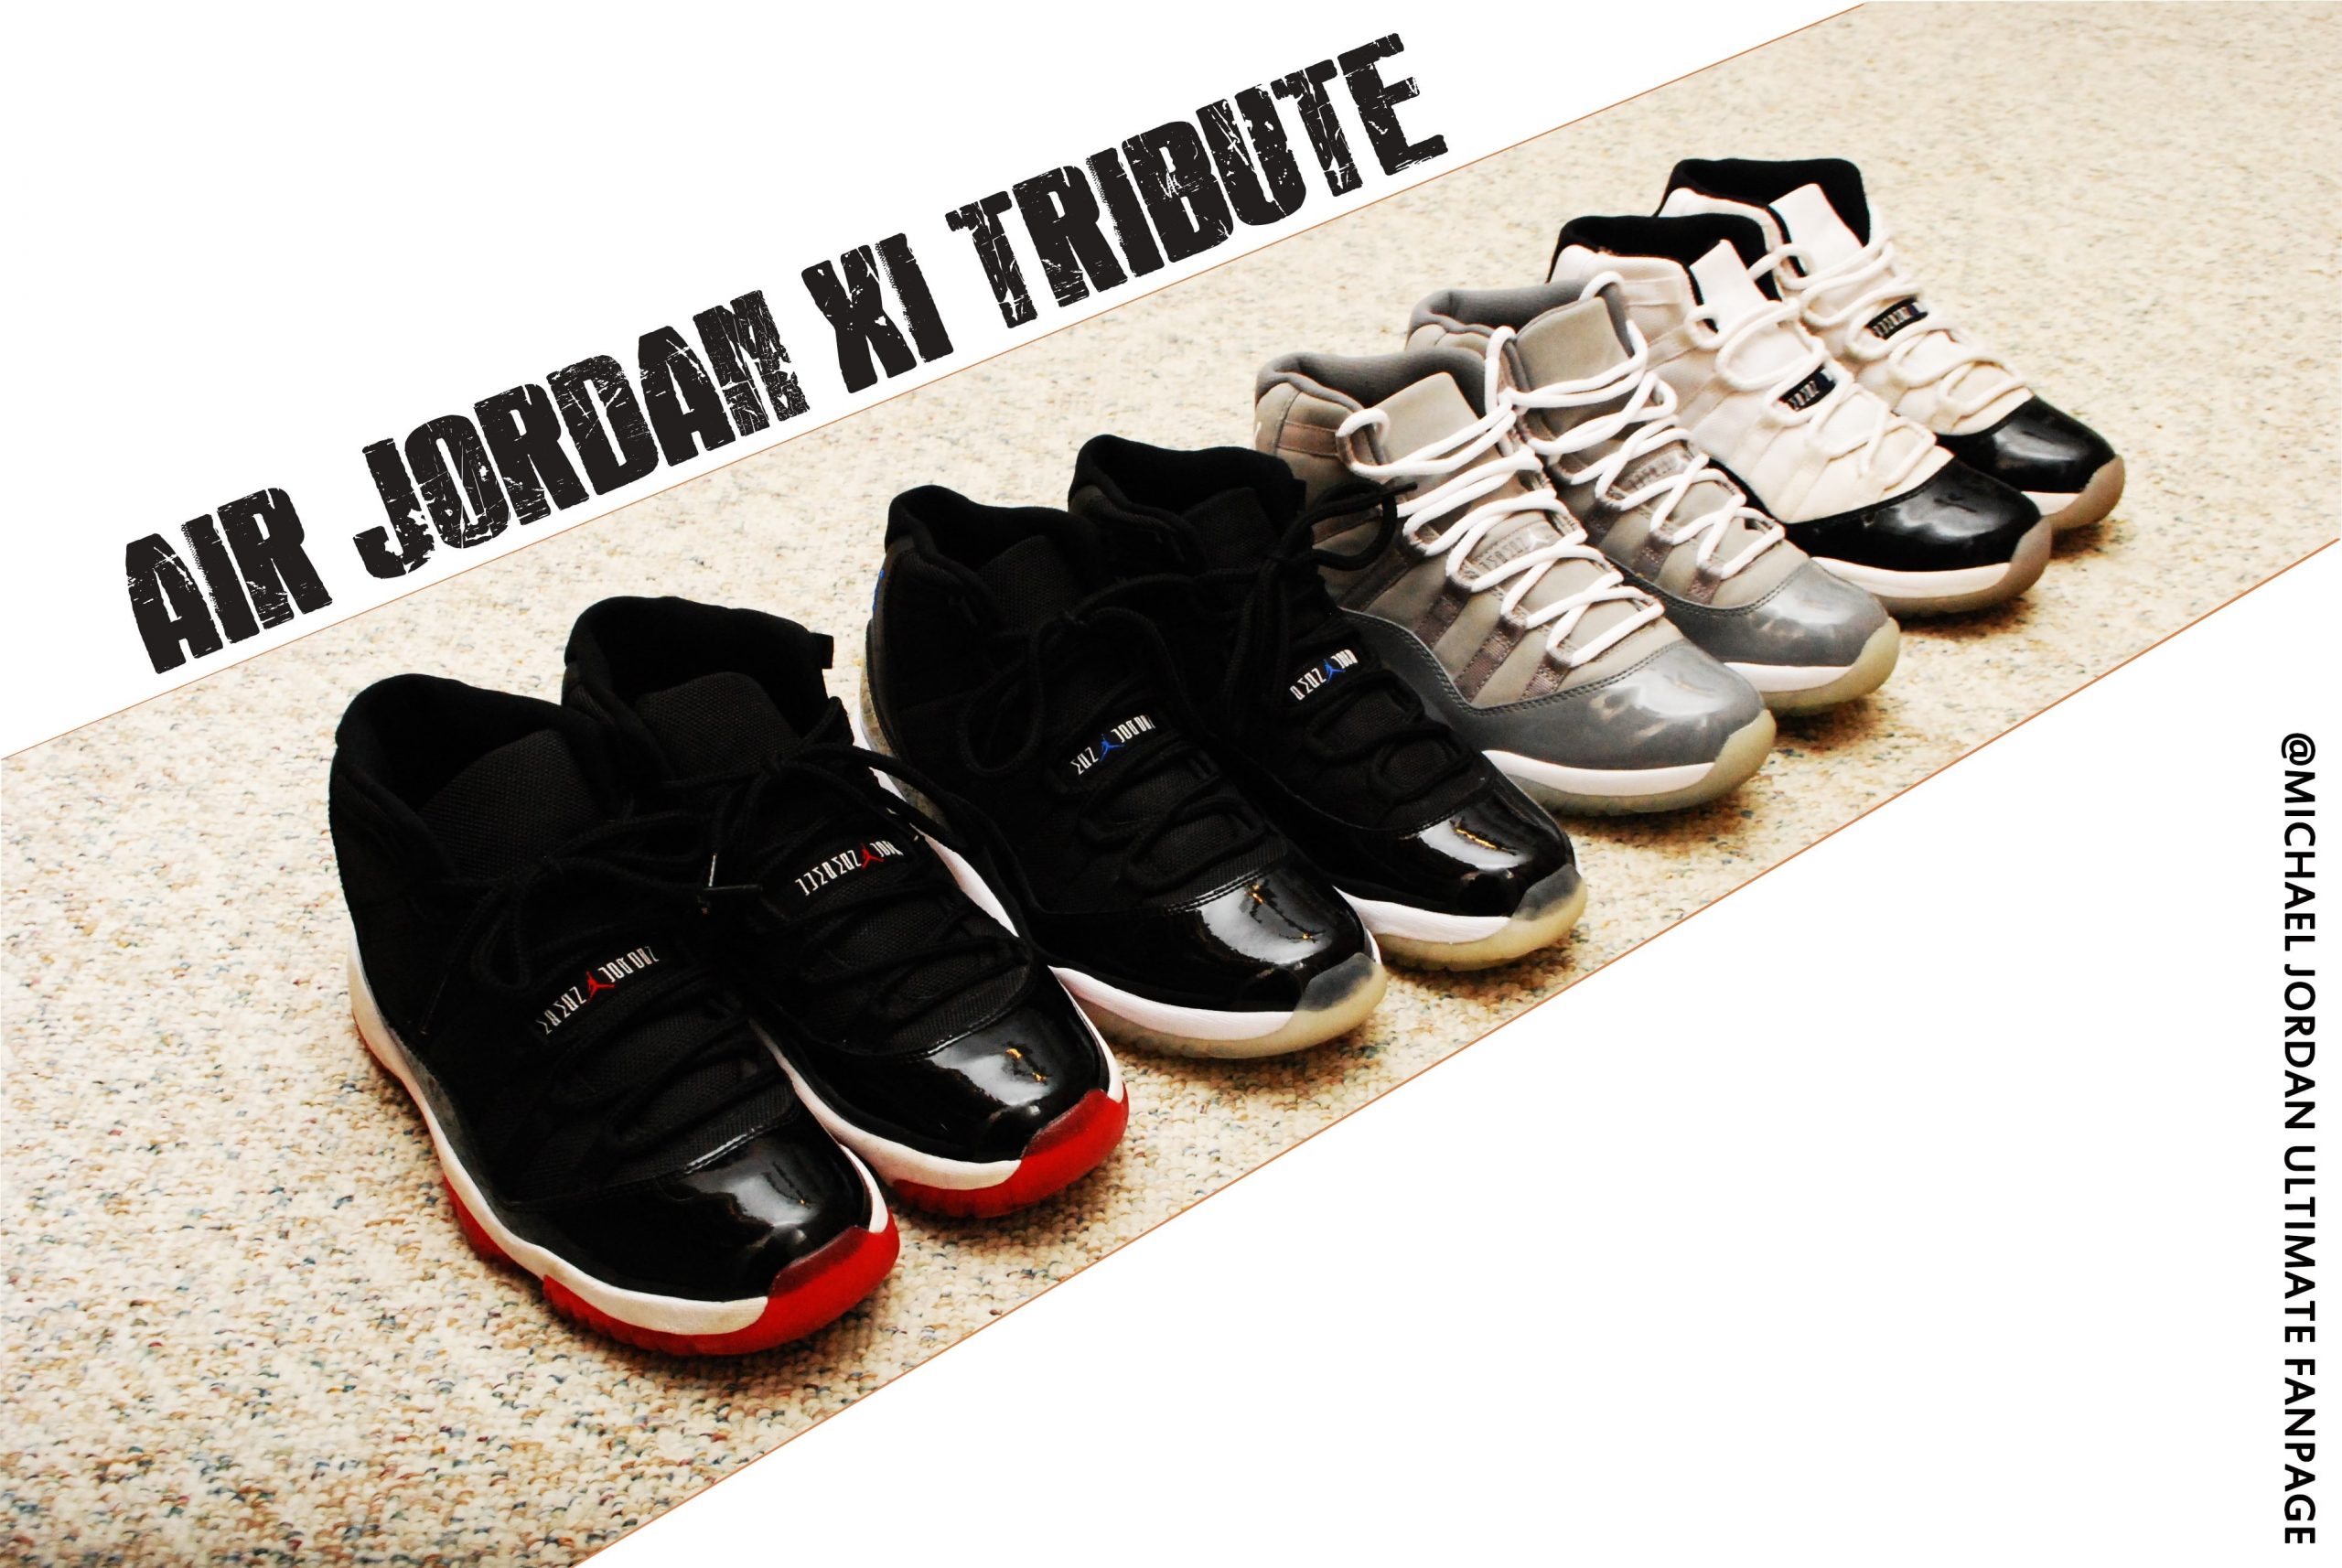 Shoes basketball sneakers michael jordan air jordan jordan xi